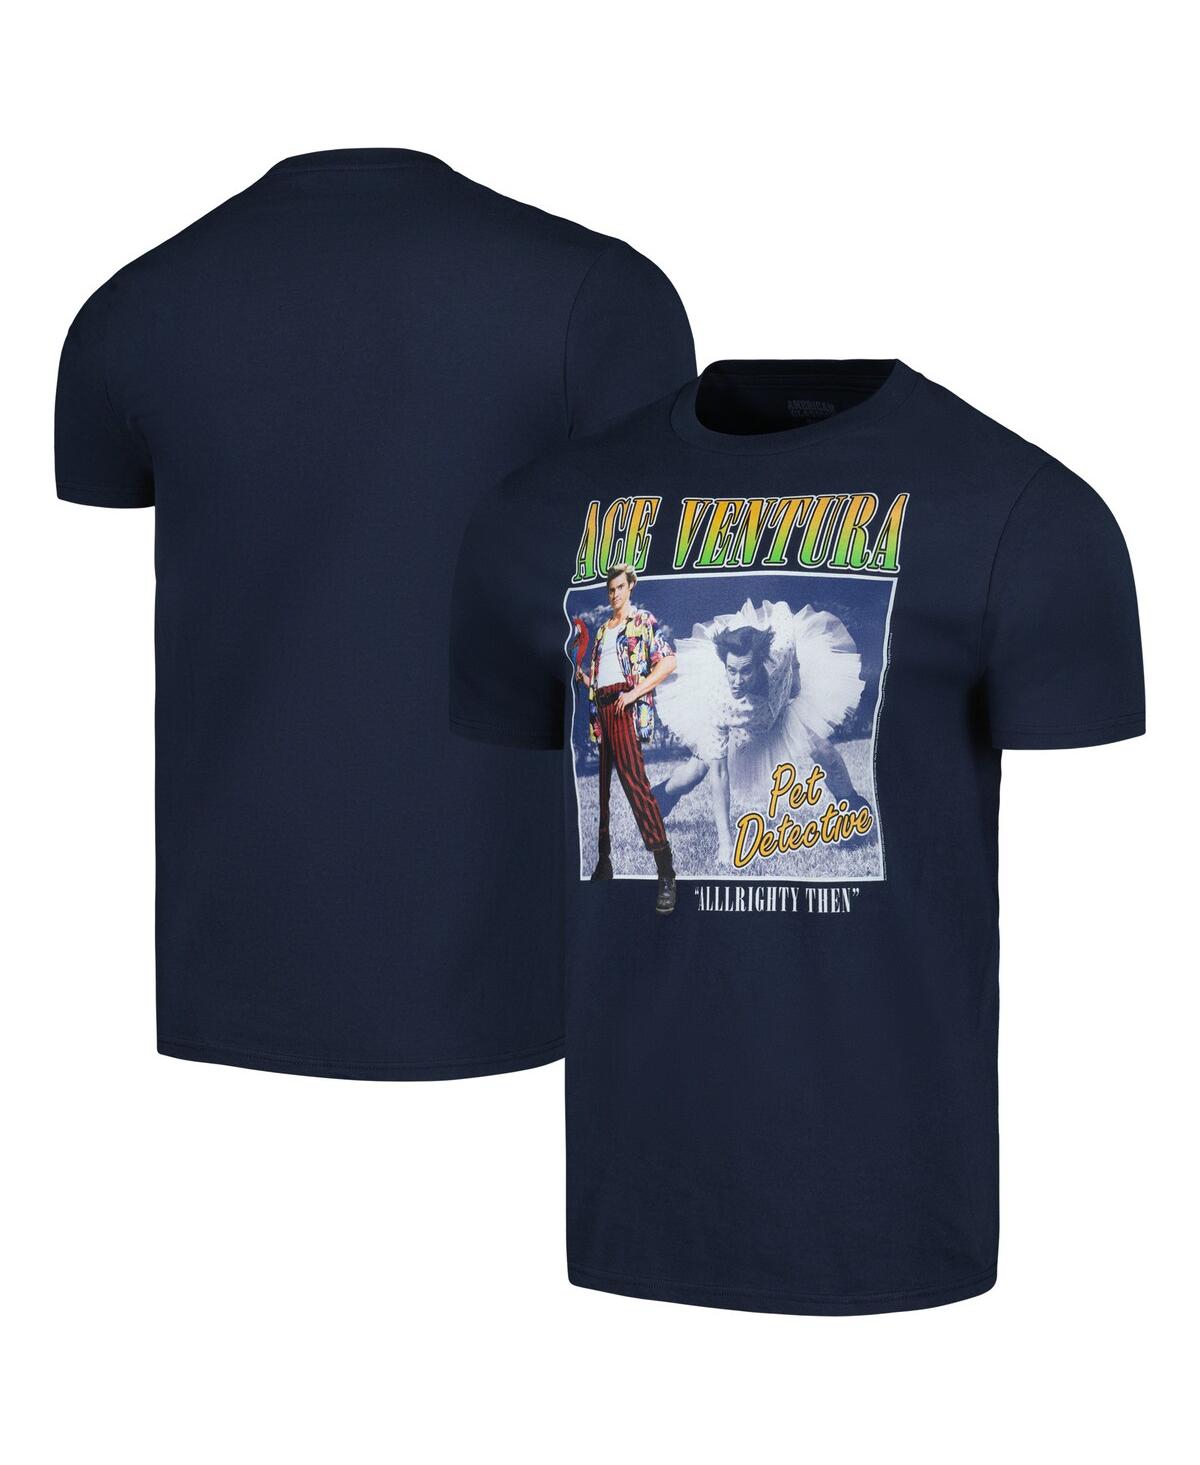 Men's Navy Ace Ventura Graphic T-shirt - Navy